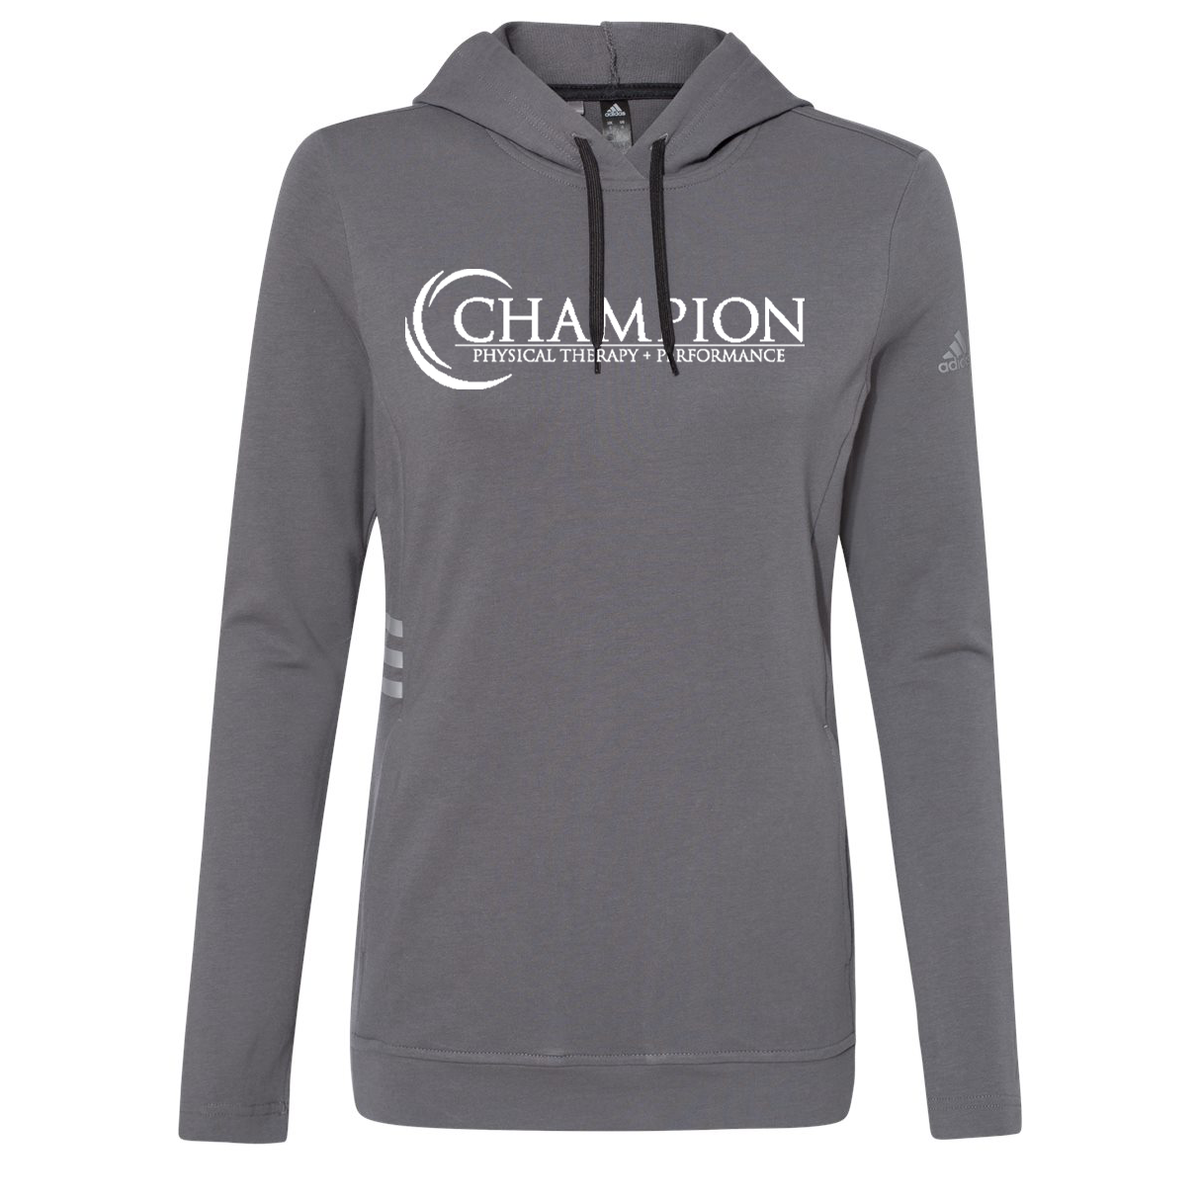 Champion Physical Therapy Adidas Women's Sweatshirt